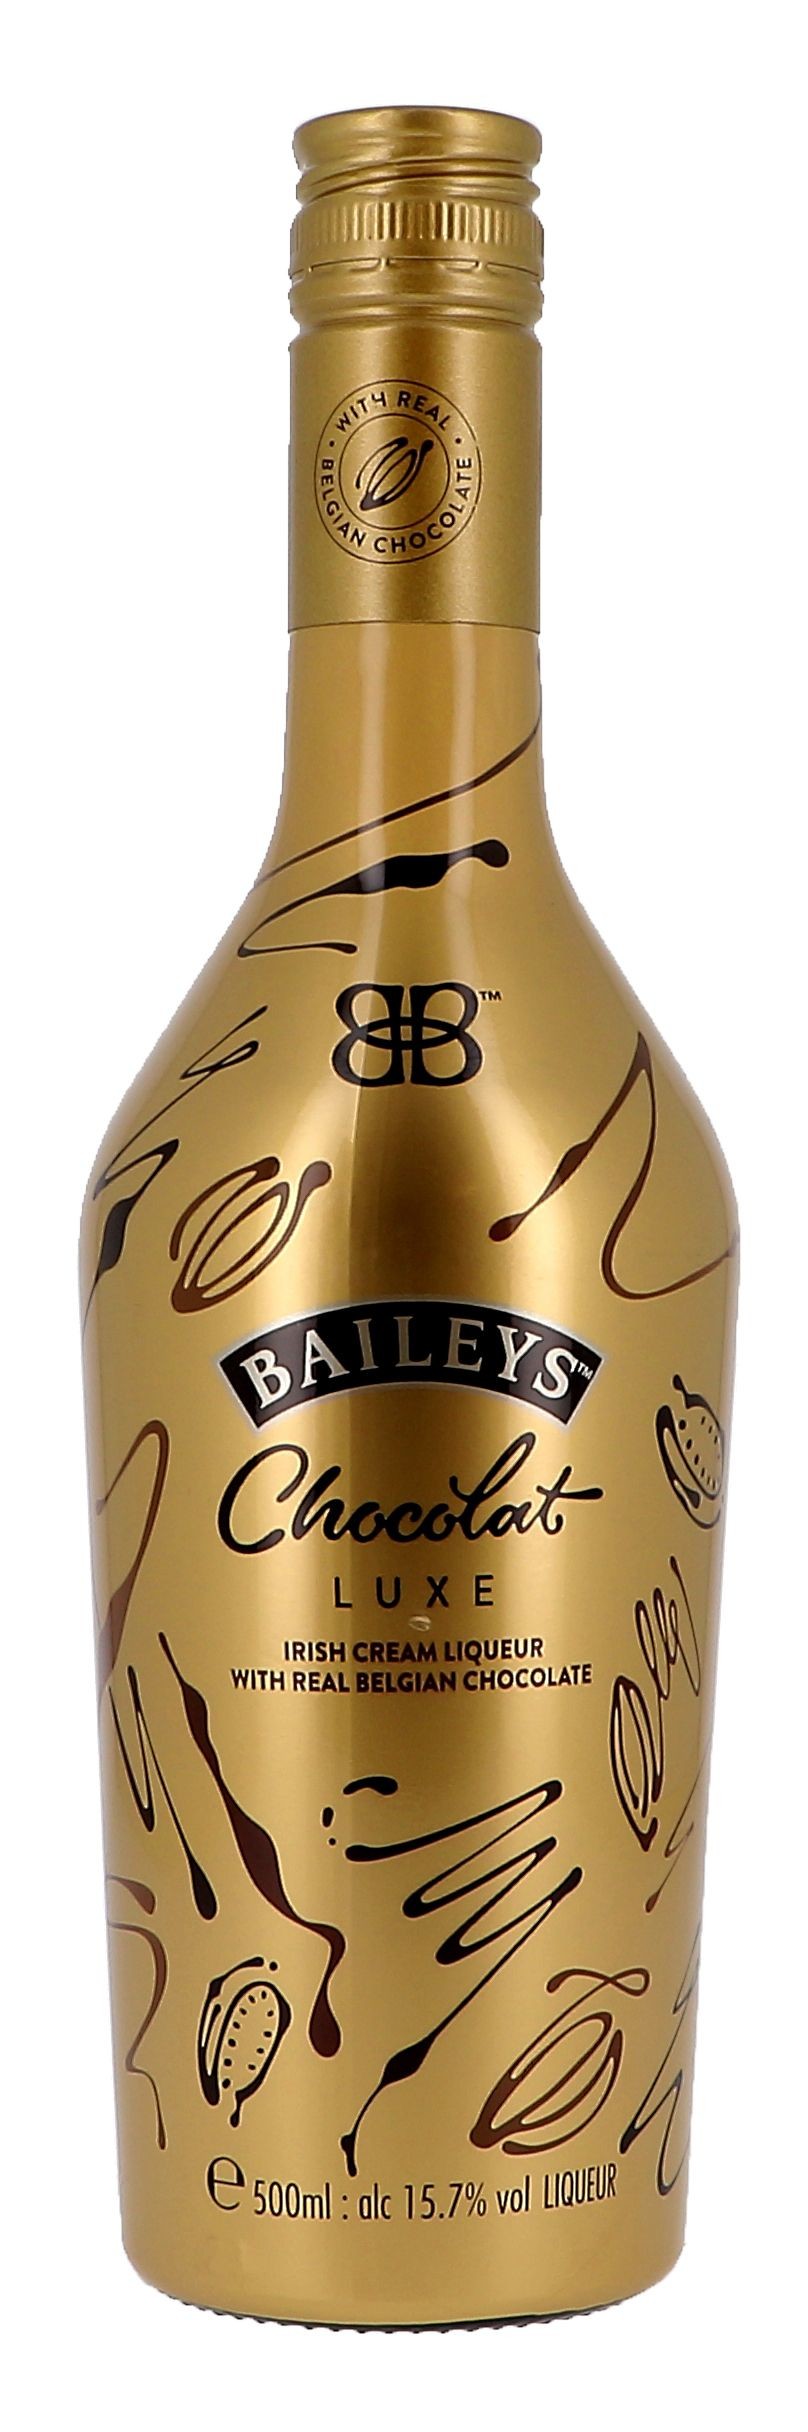 Baileys Chocolat lux 50cl 15,7% - Nevejan